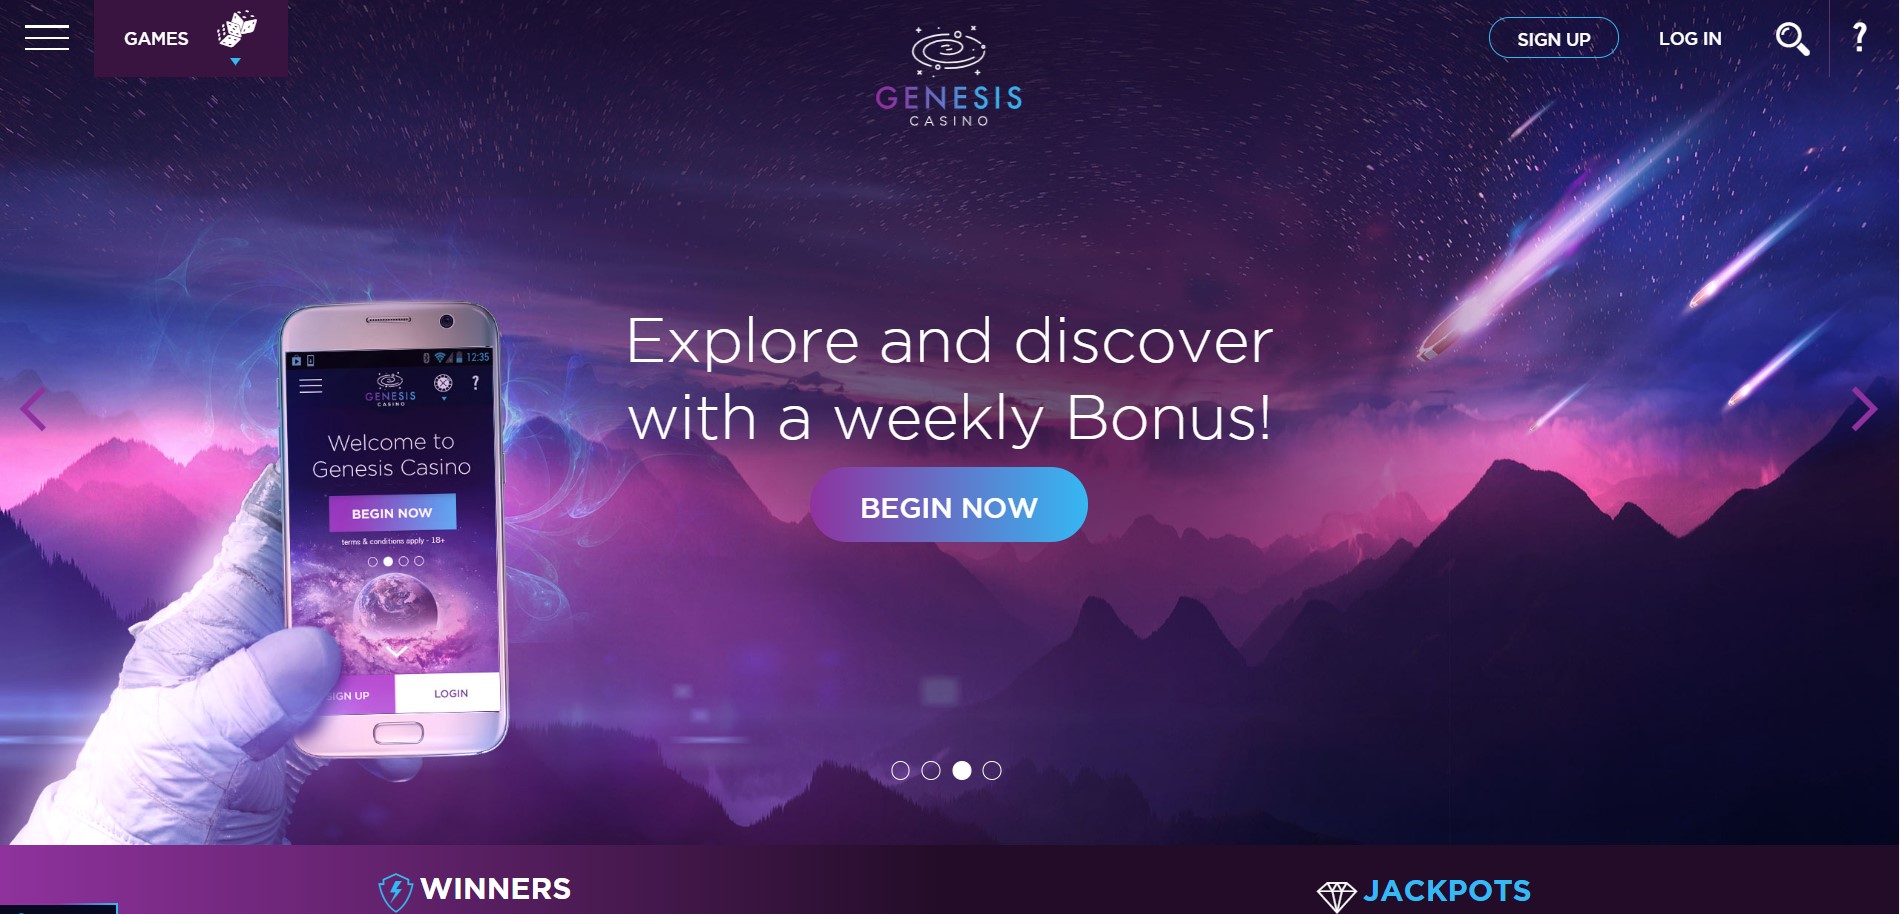 Genesis Casino Weekly Bonus